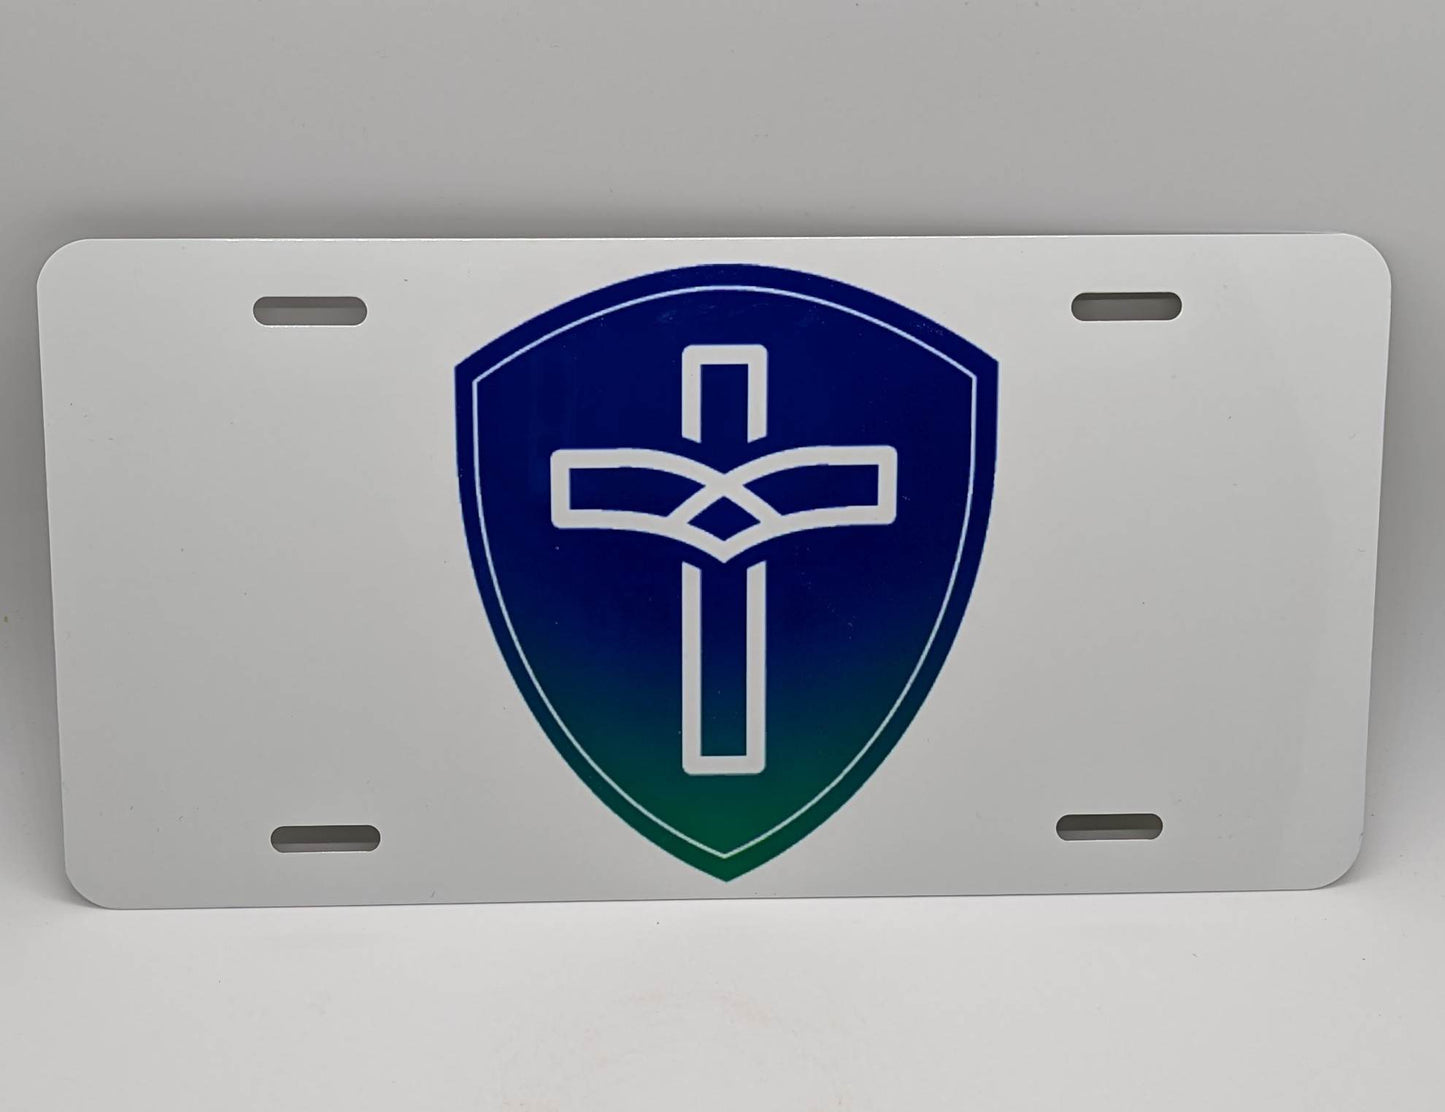 FHCS License Plate - Shield